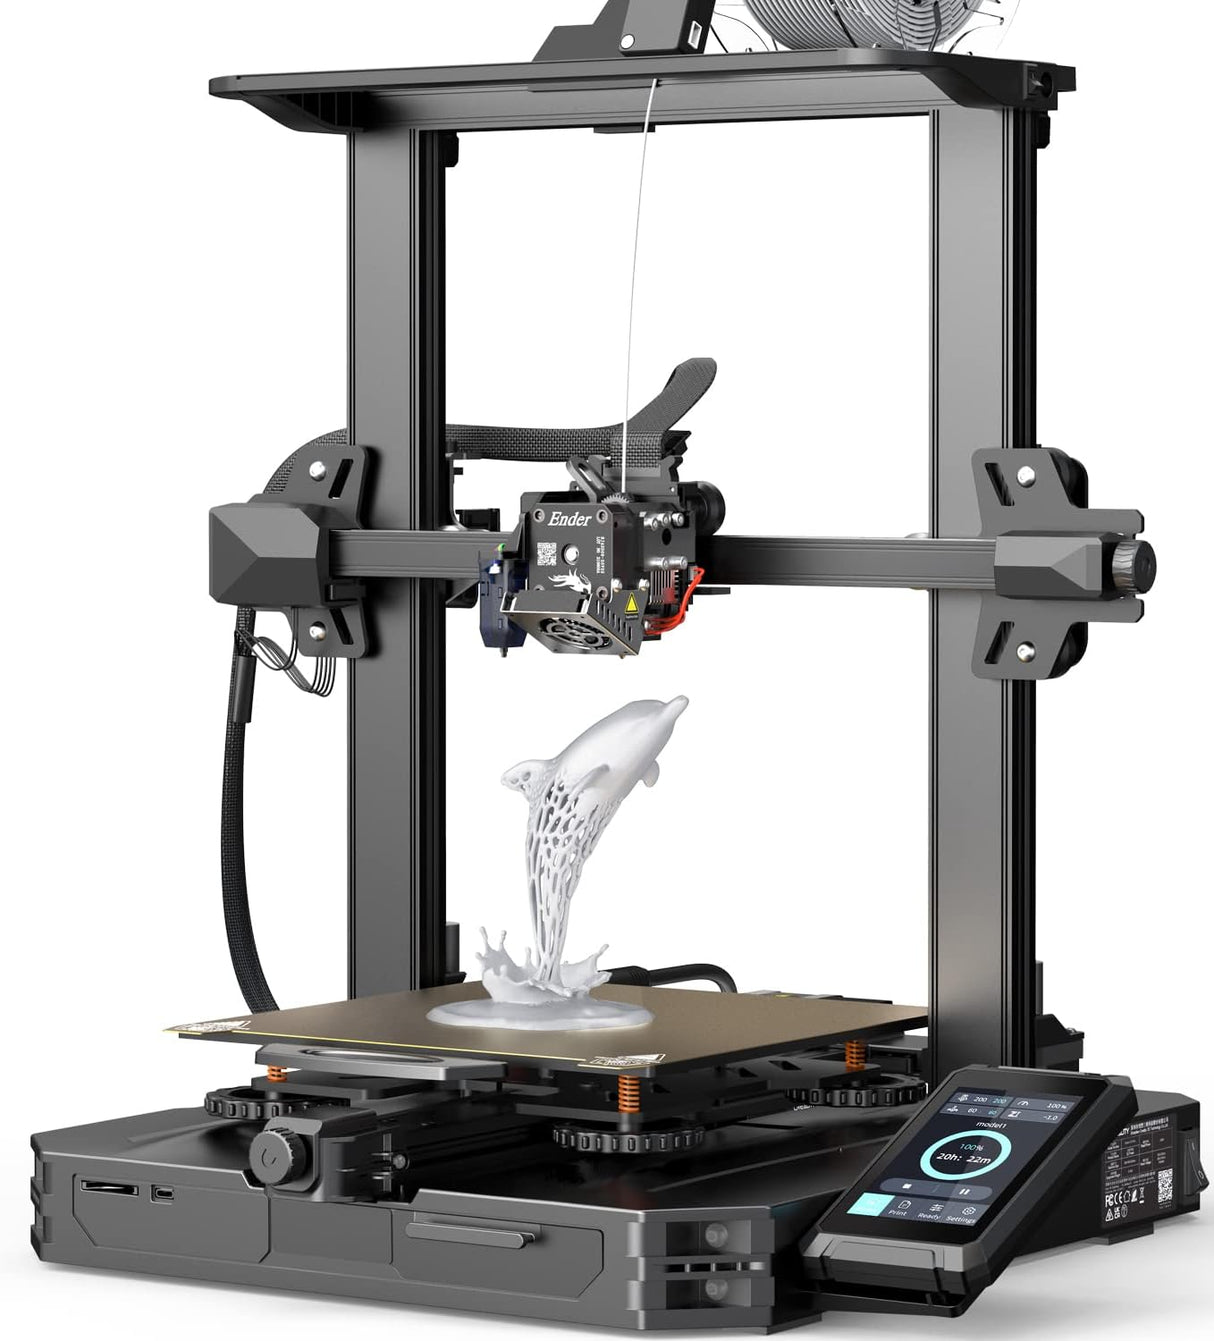 Impresora 3D Creality Ender-3 S1 Pro Fdm 220X220X270Mm - Ender-3 Si Pro FullOffice.com